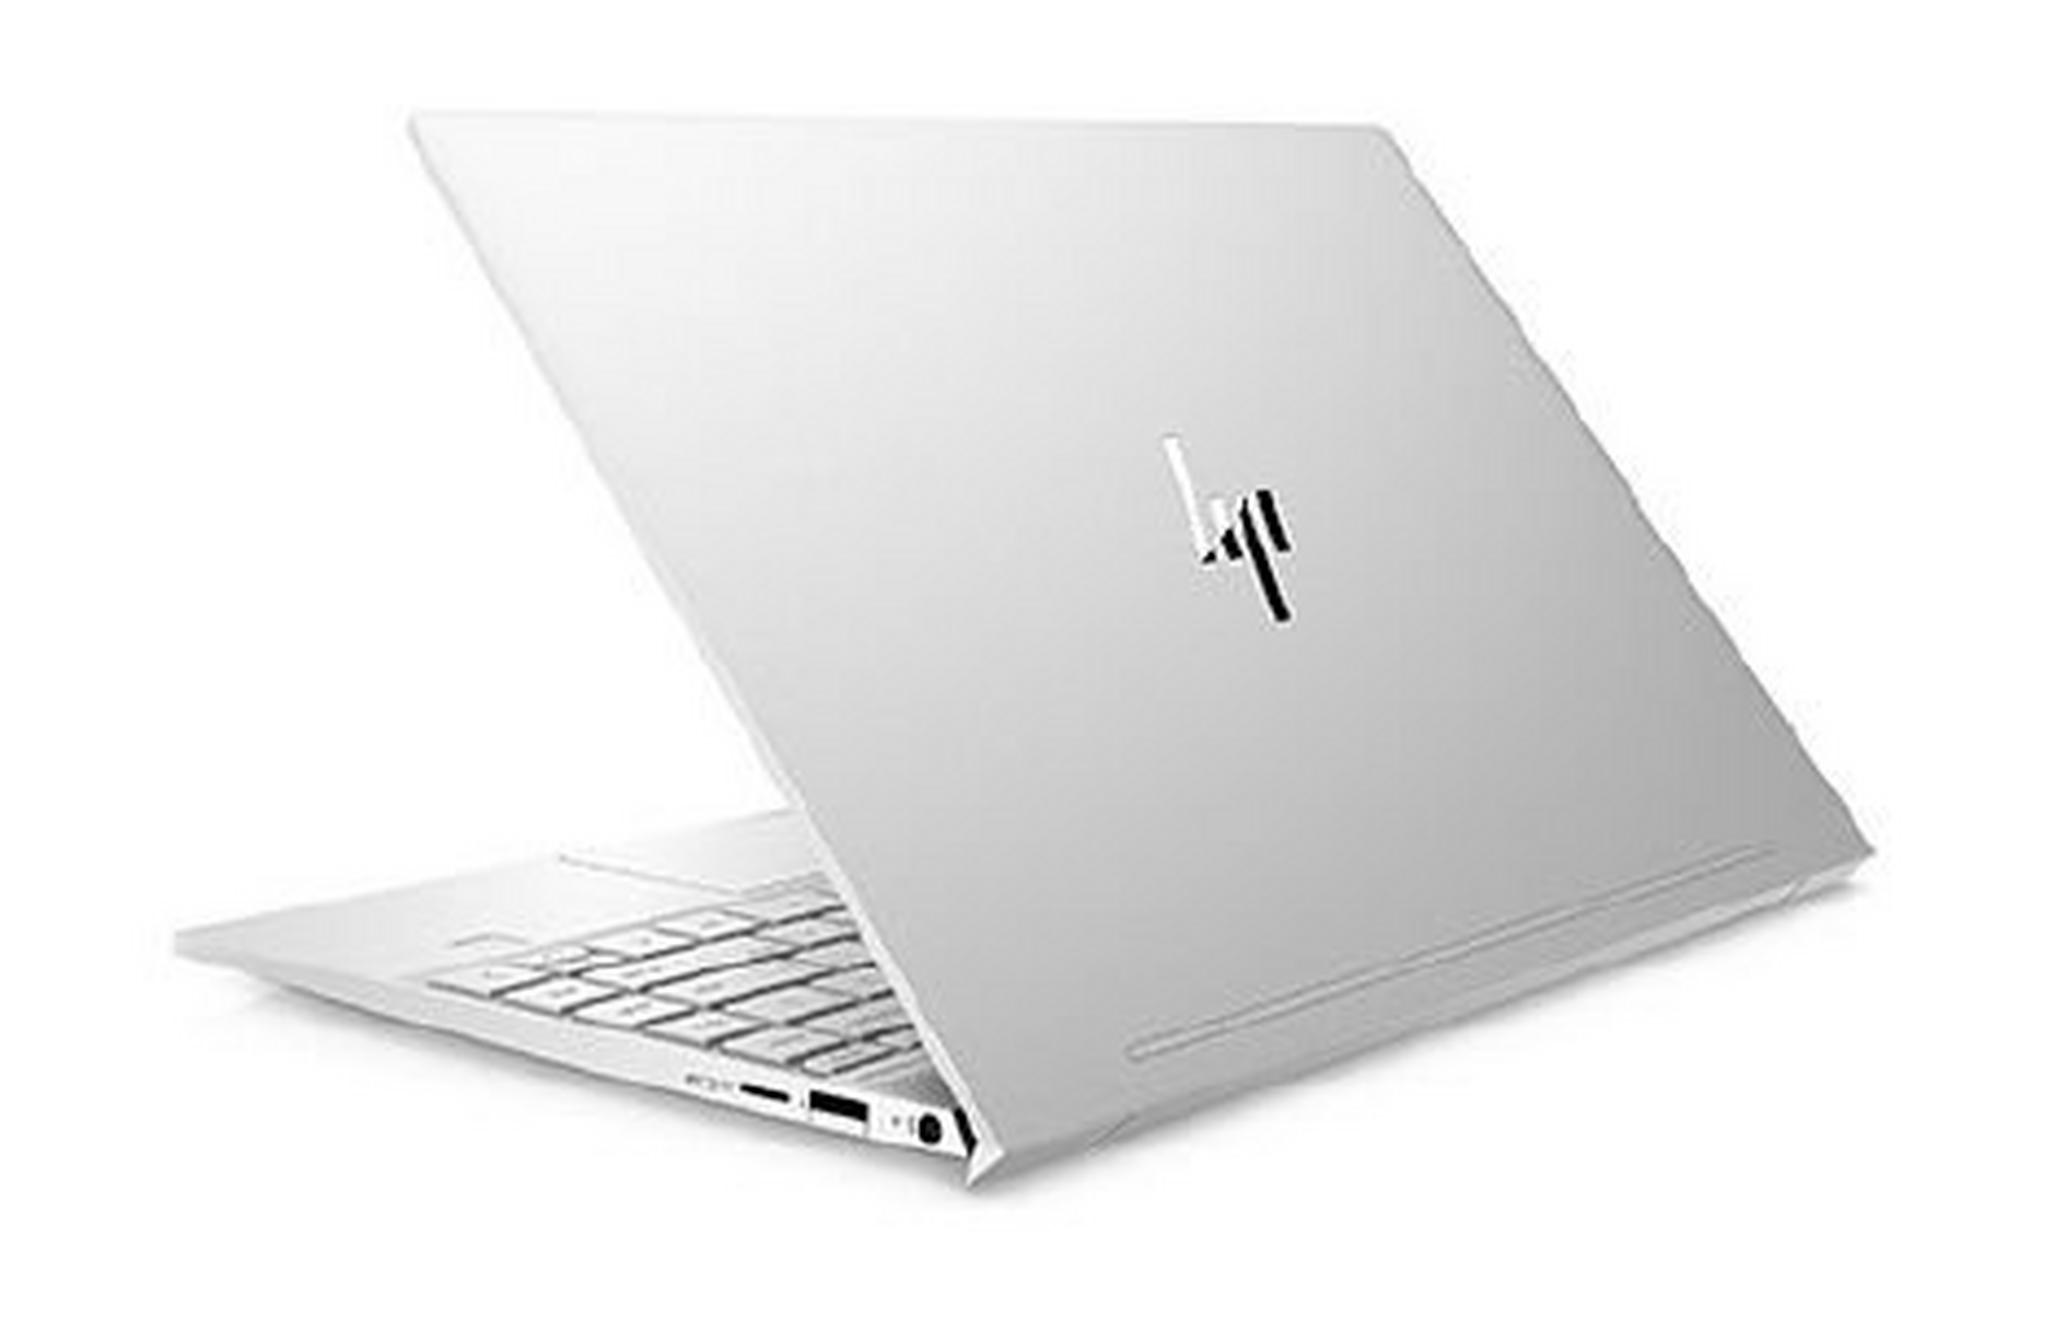 HP ENVY Core i5 8GB RAM 256GB SSD 13 inch Laptop - Silver